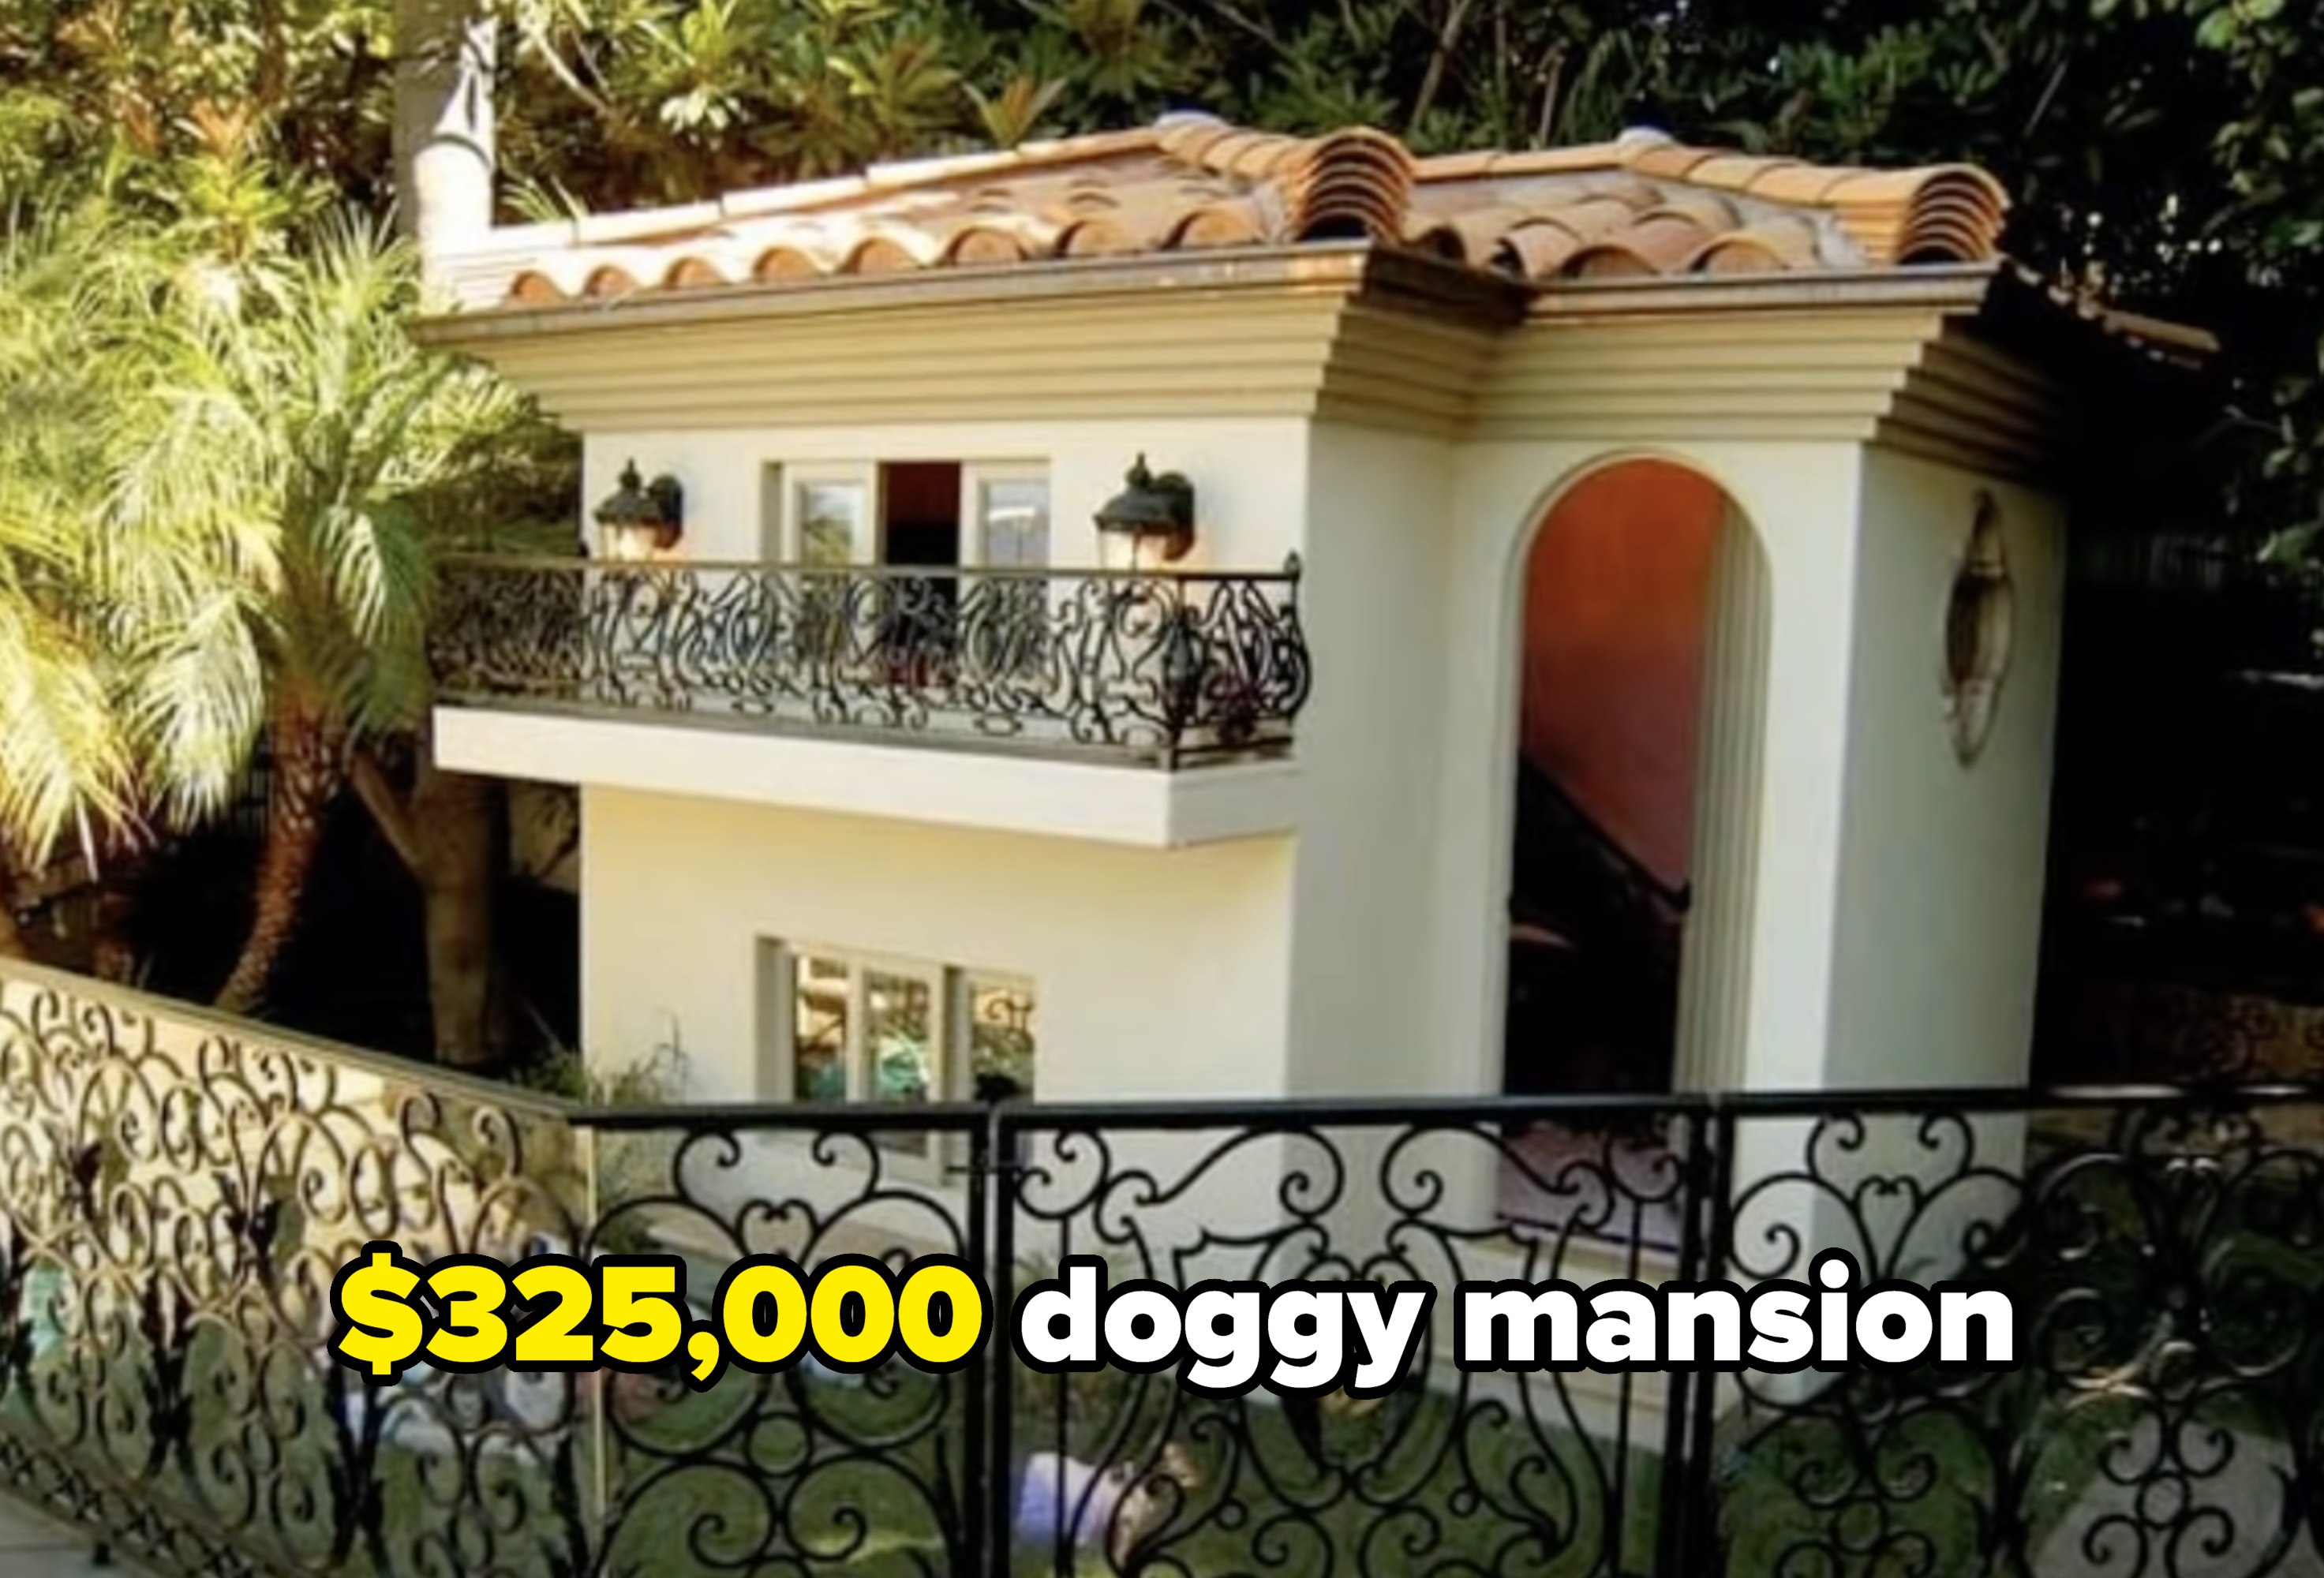 Paris Hilton&#x27;s dog mansion